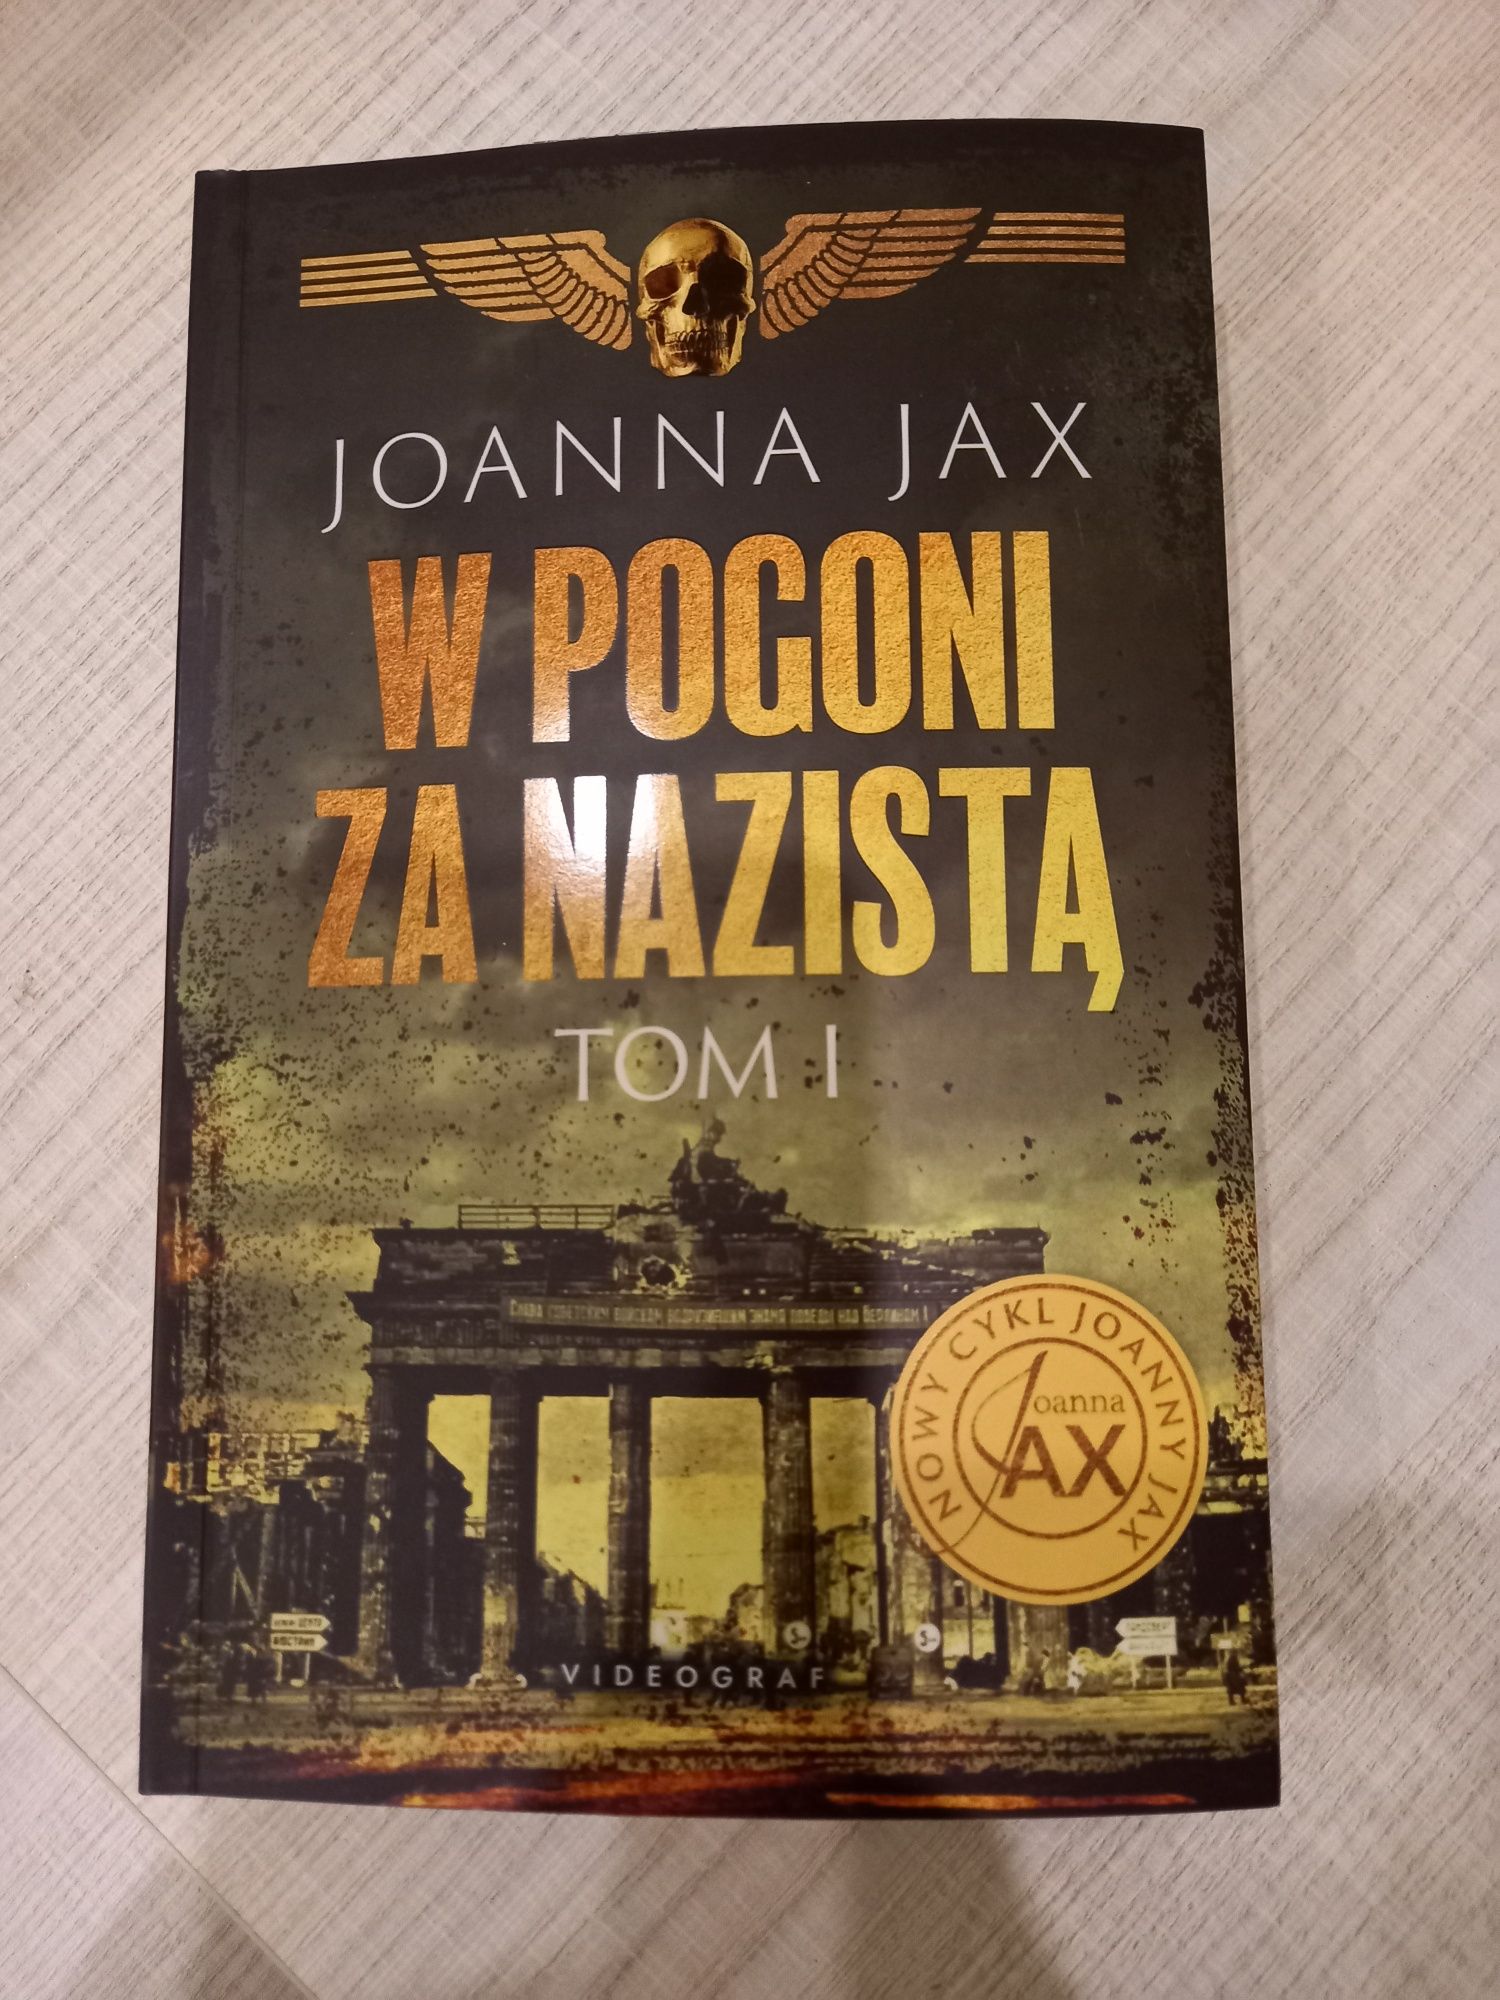 Joanna Jax  "W pogoni za nazistą", tom I